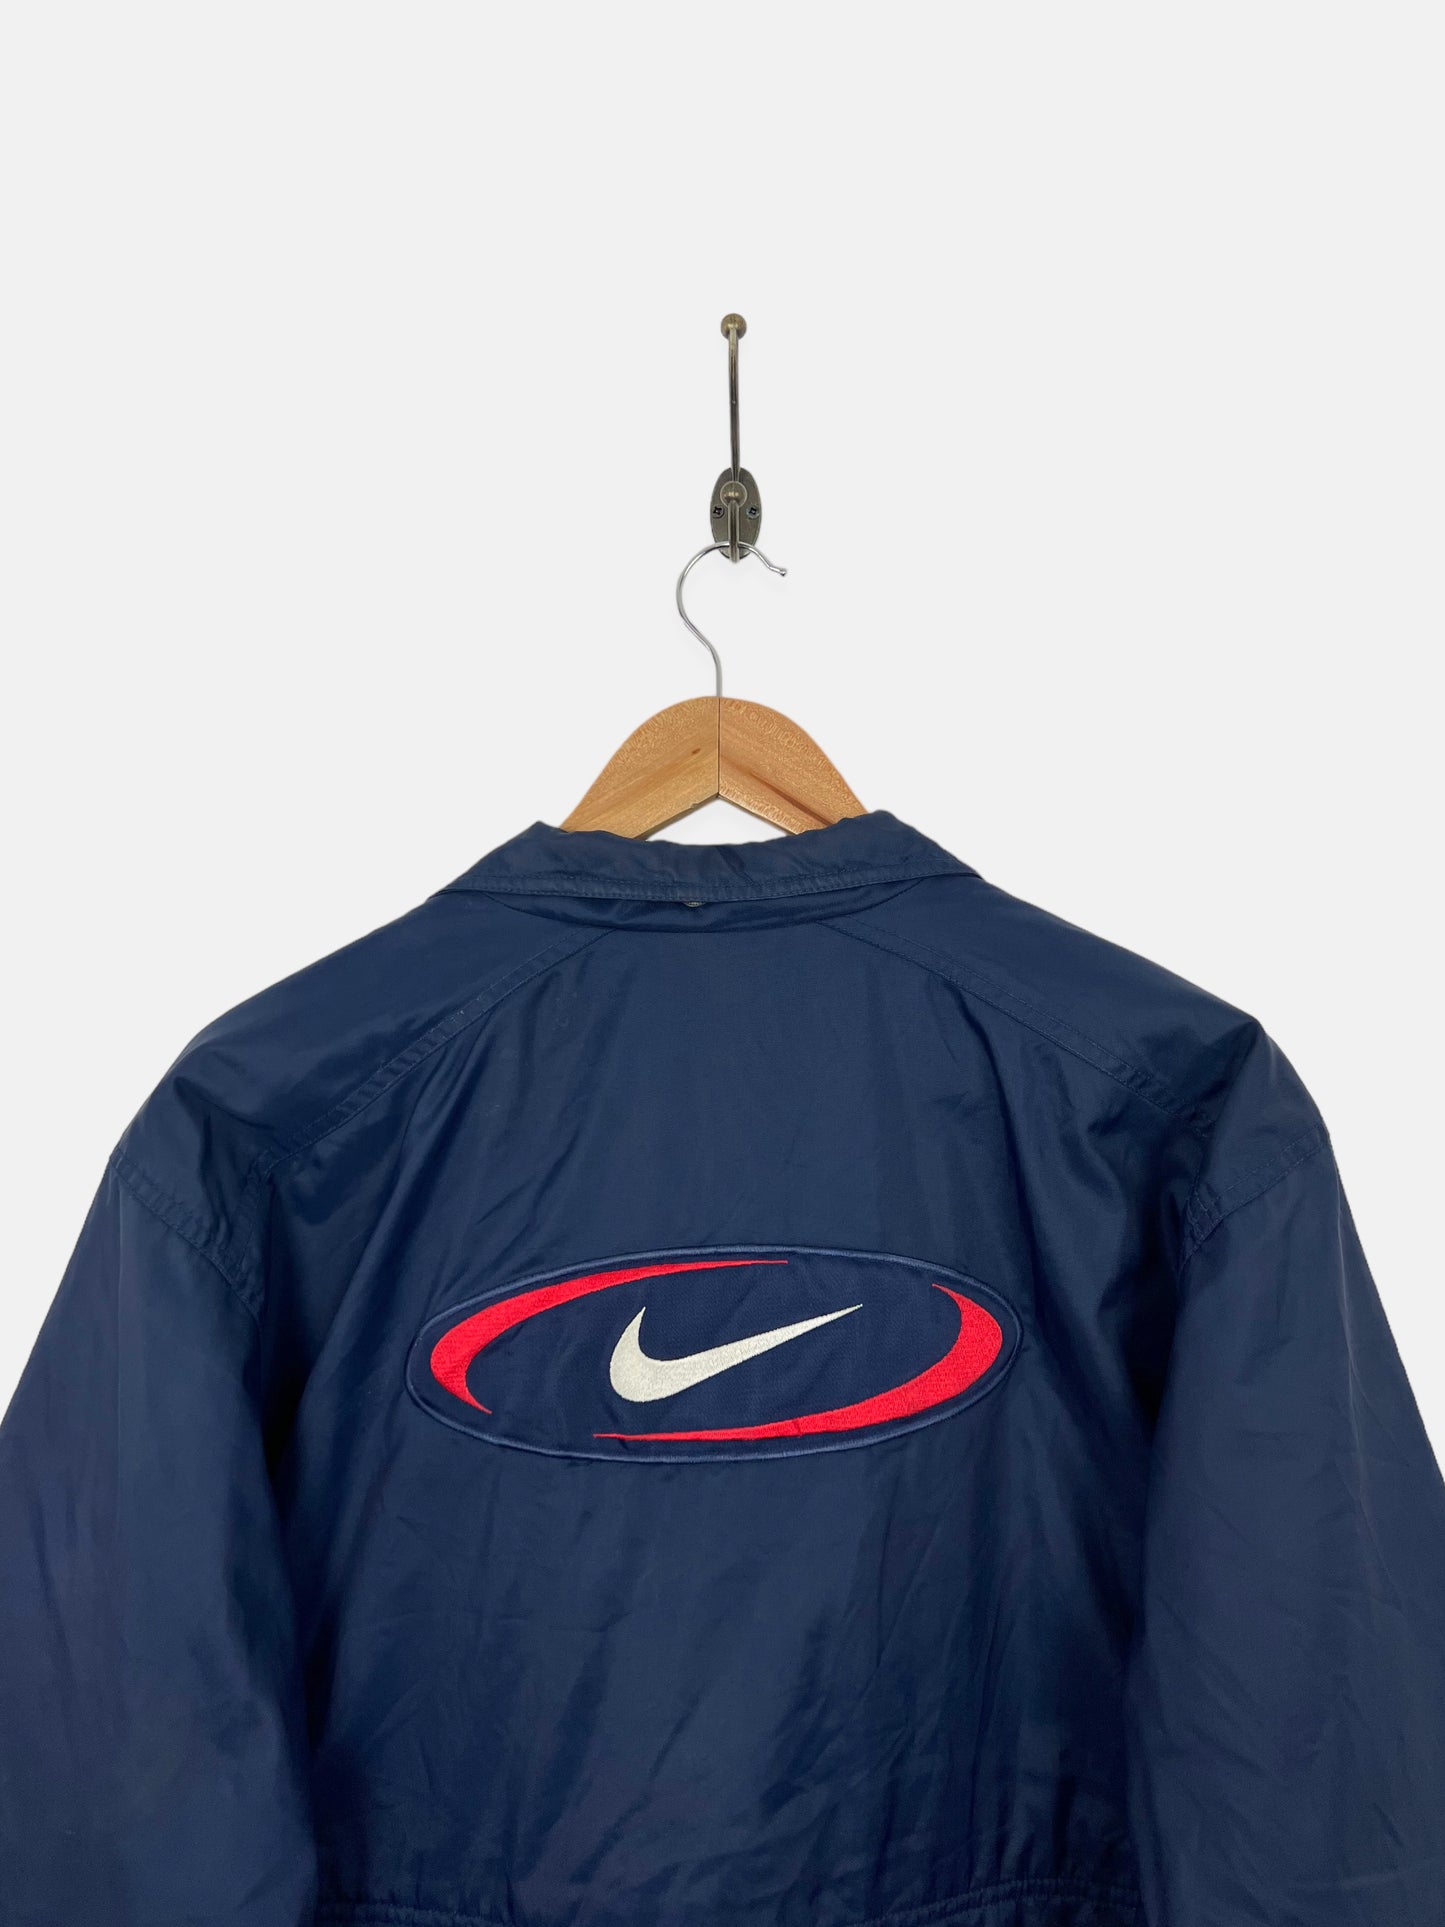 90's Nike Embroidered Vintage Jacket Size M